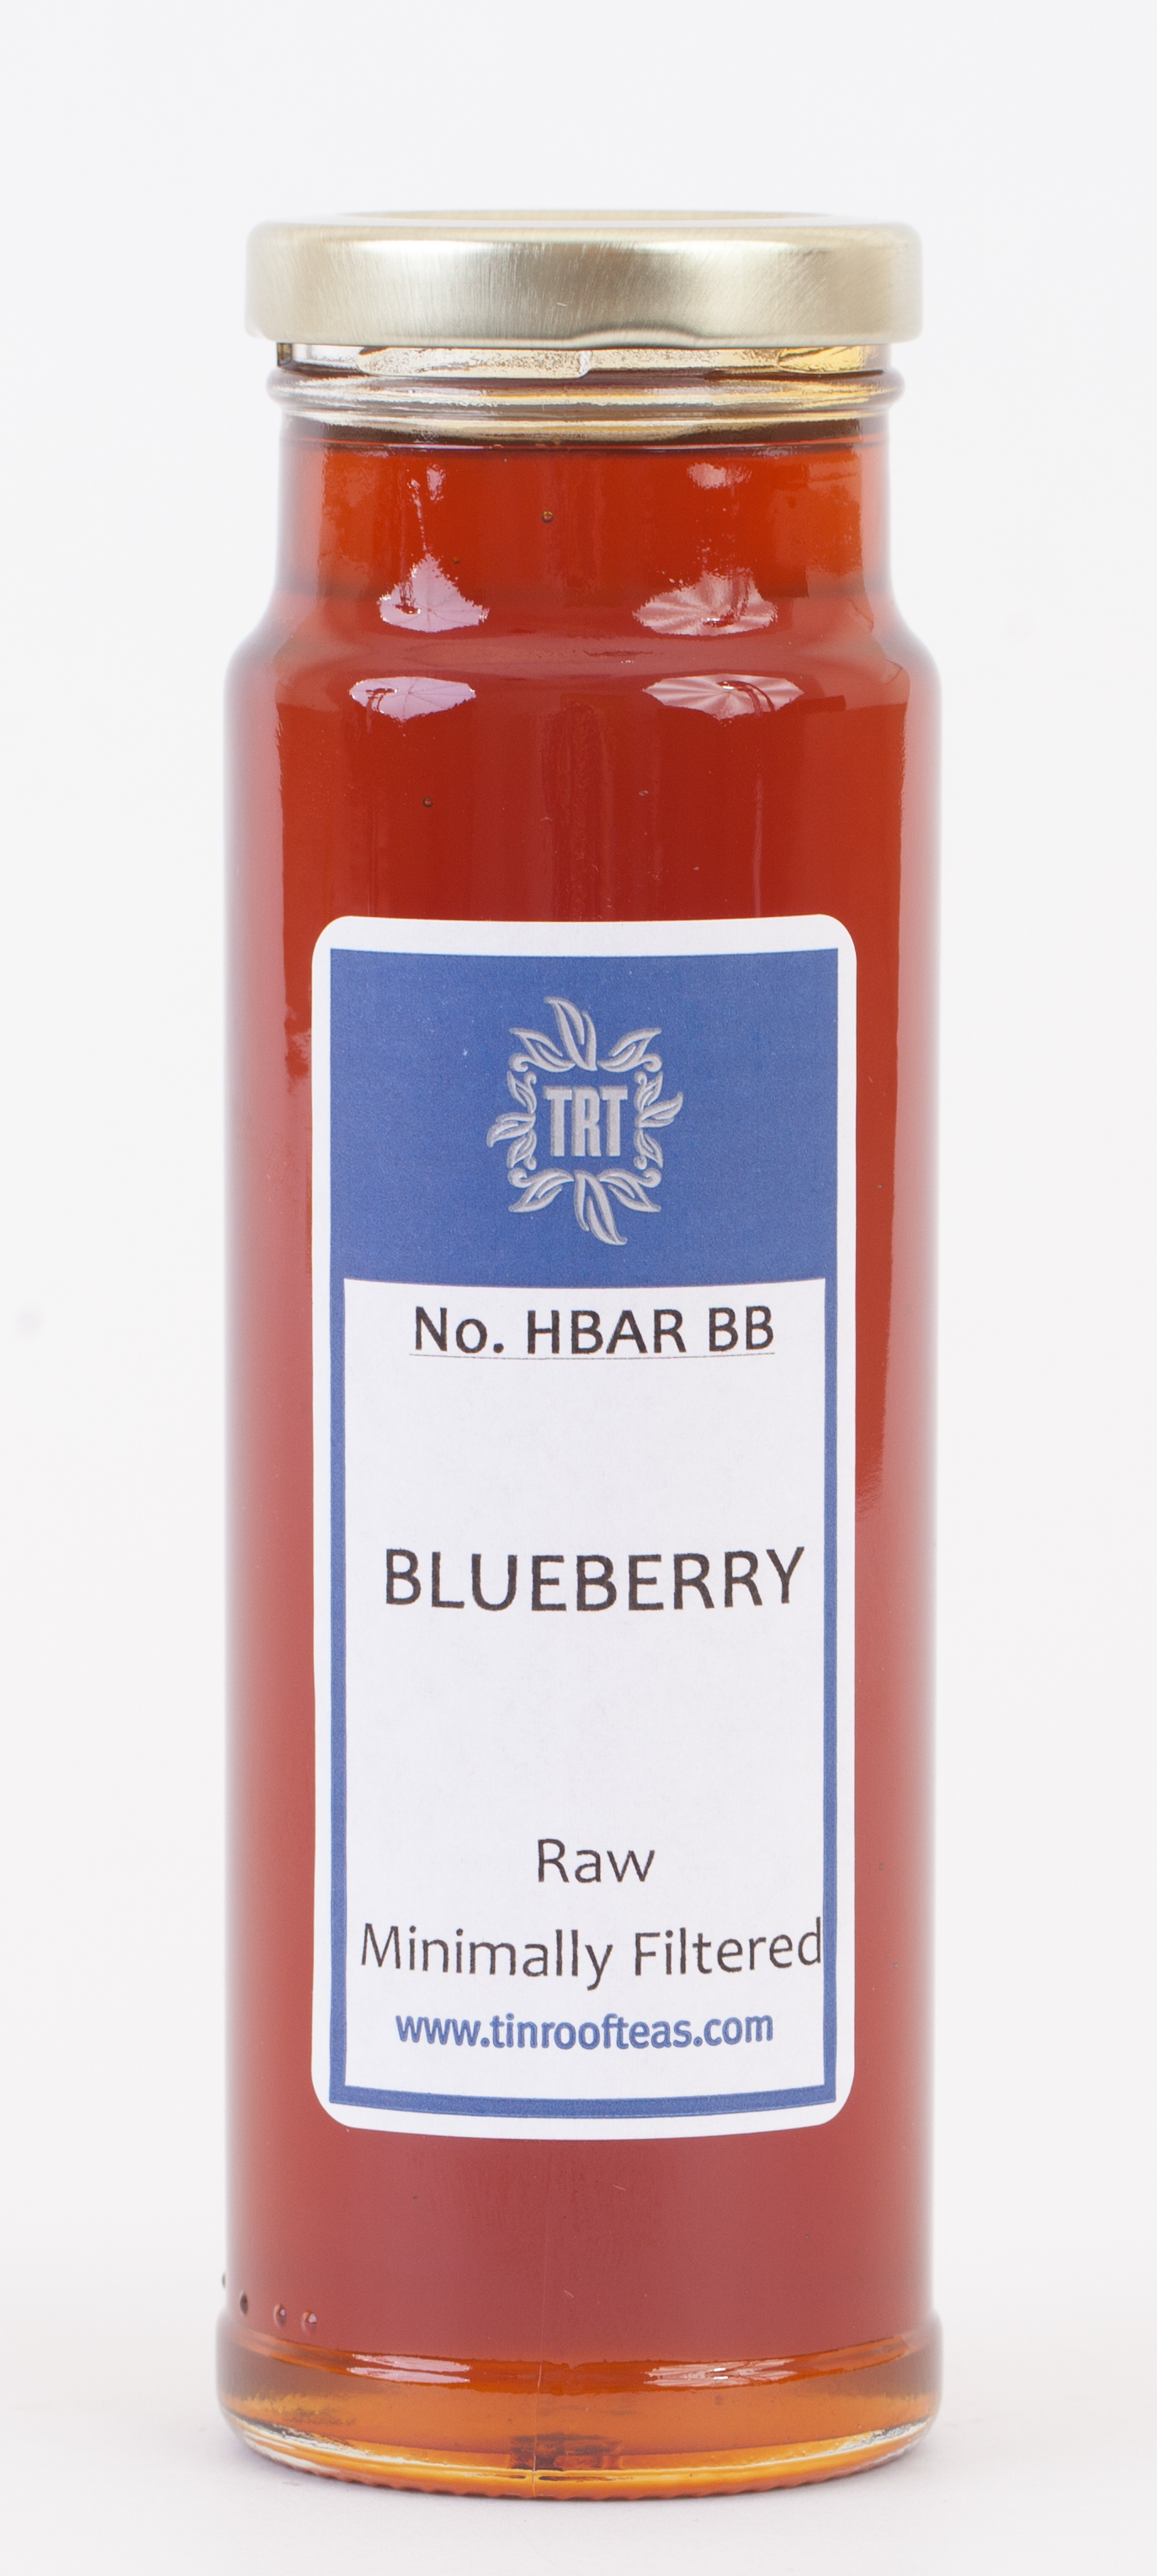 Blueberry Honey